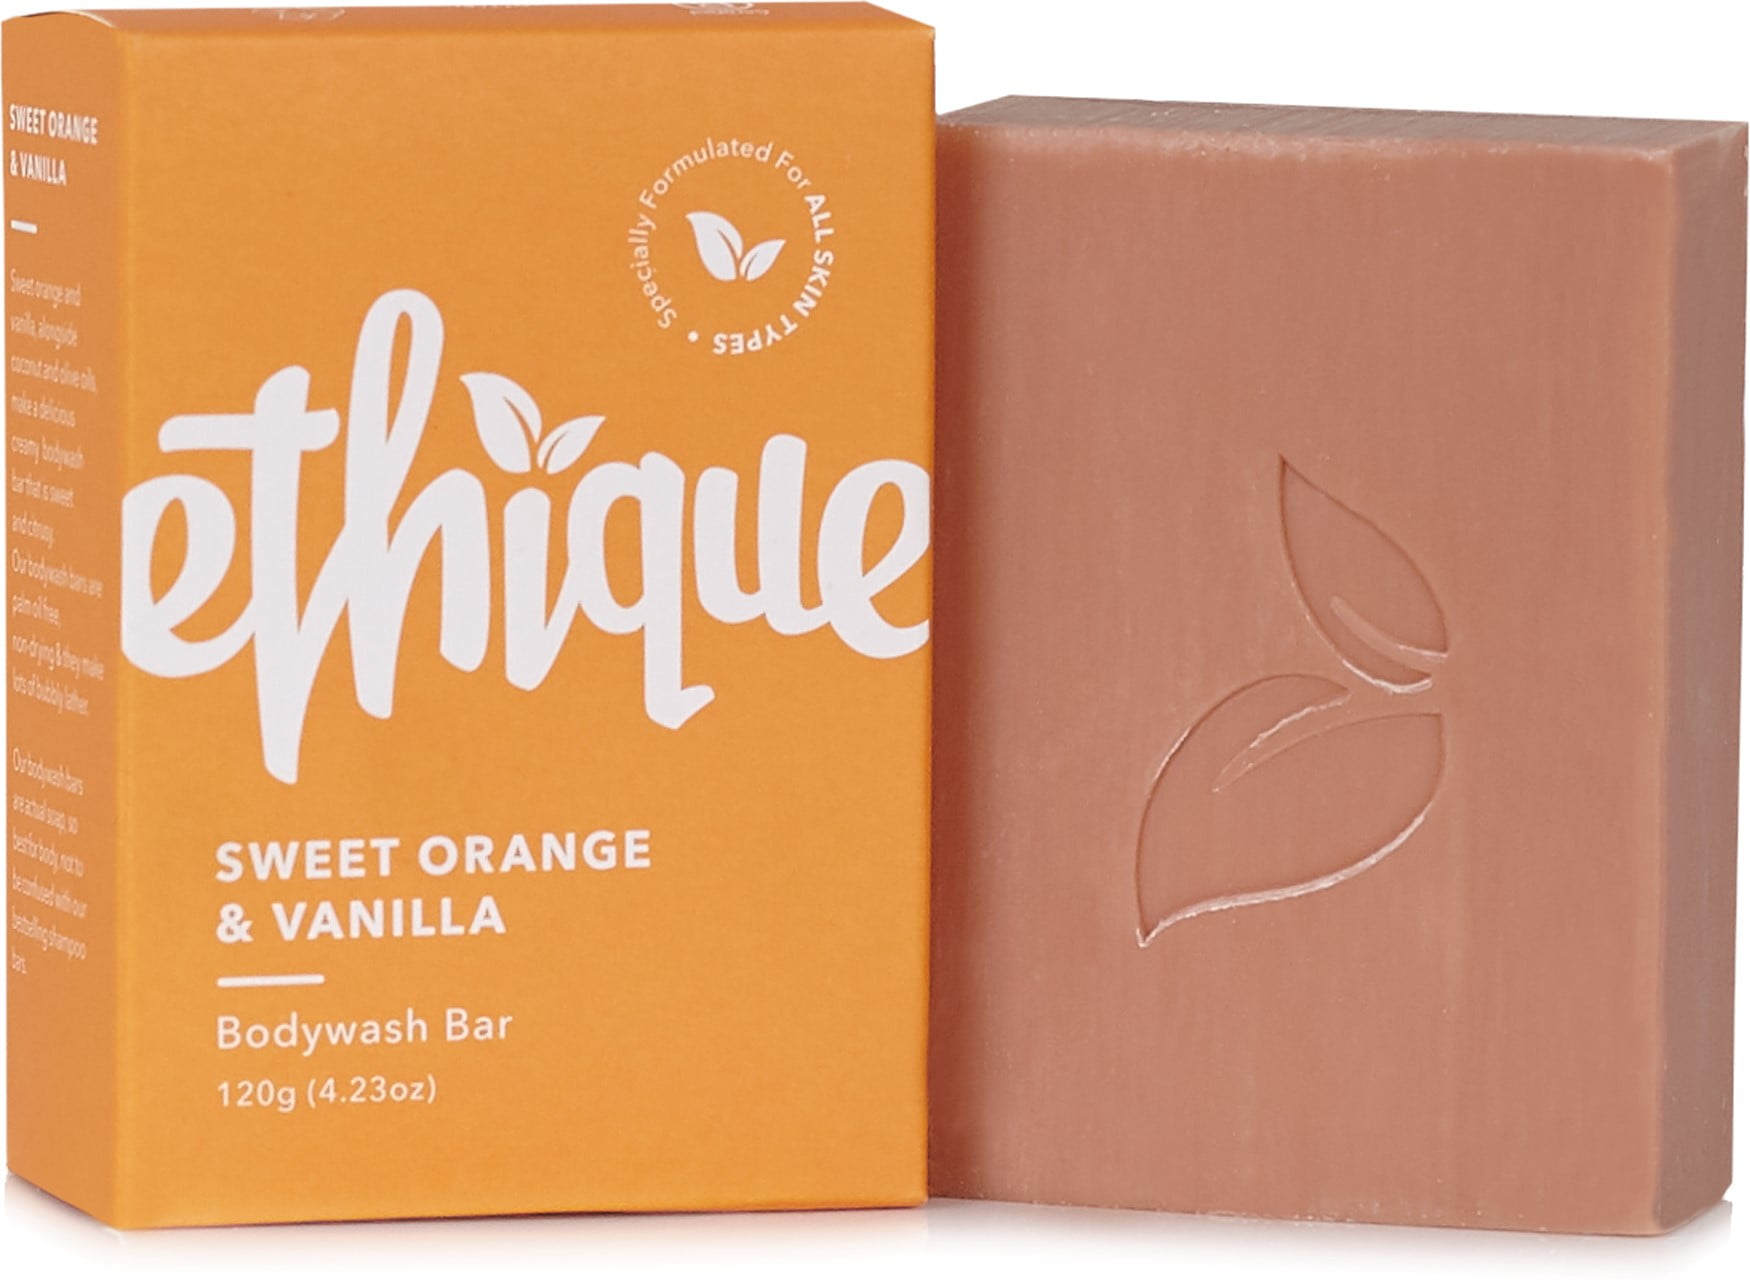 Ethique Bodywash, Sweet Orange & Vanilla - 4.23 oz